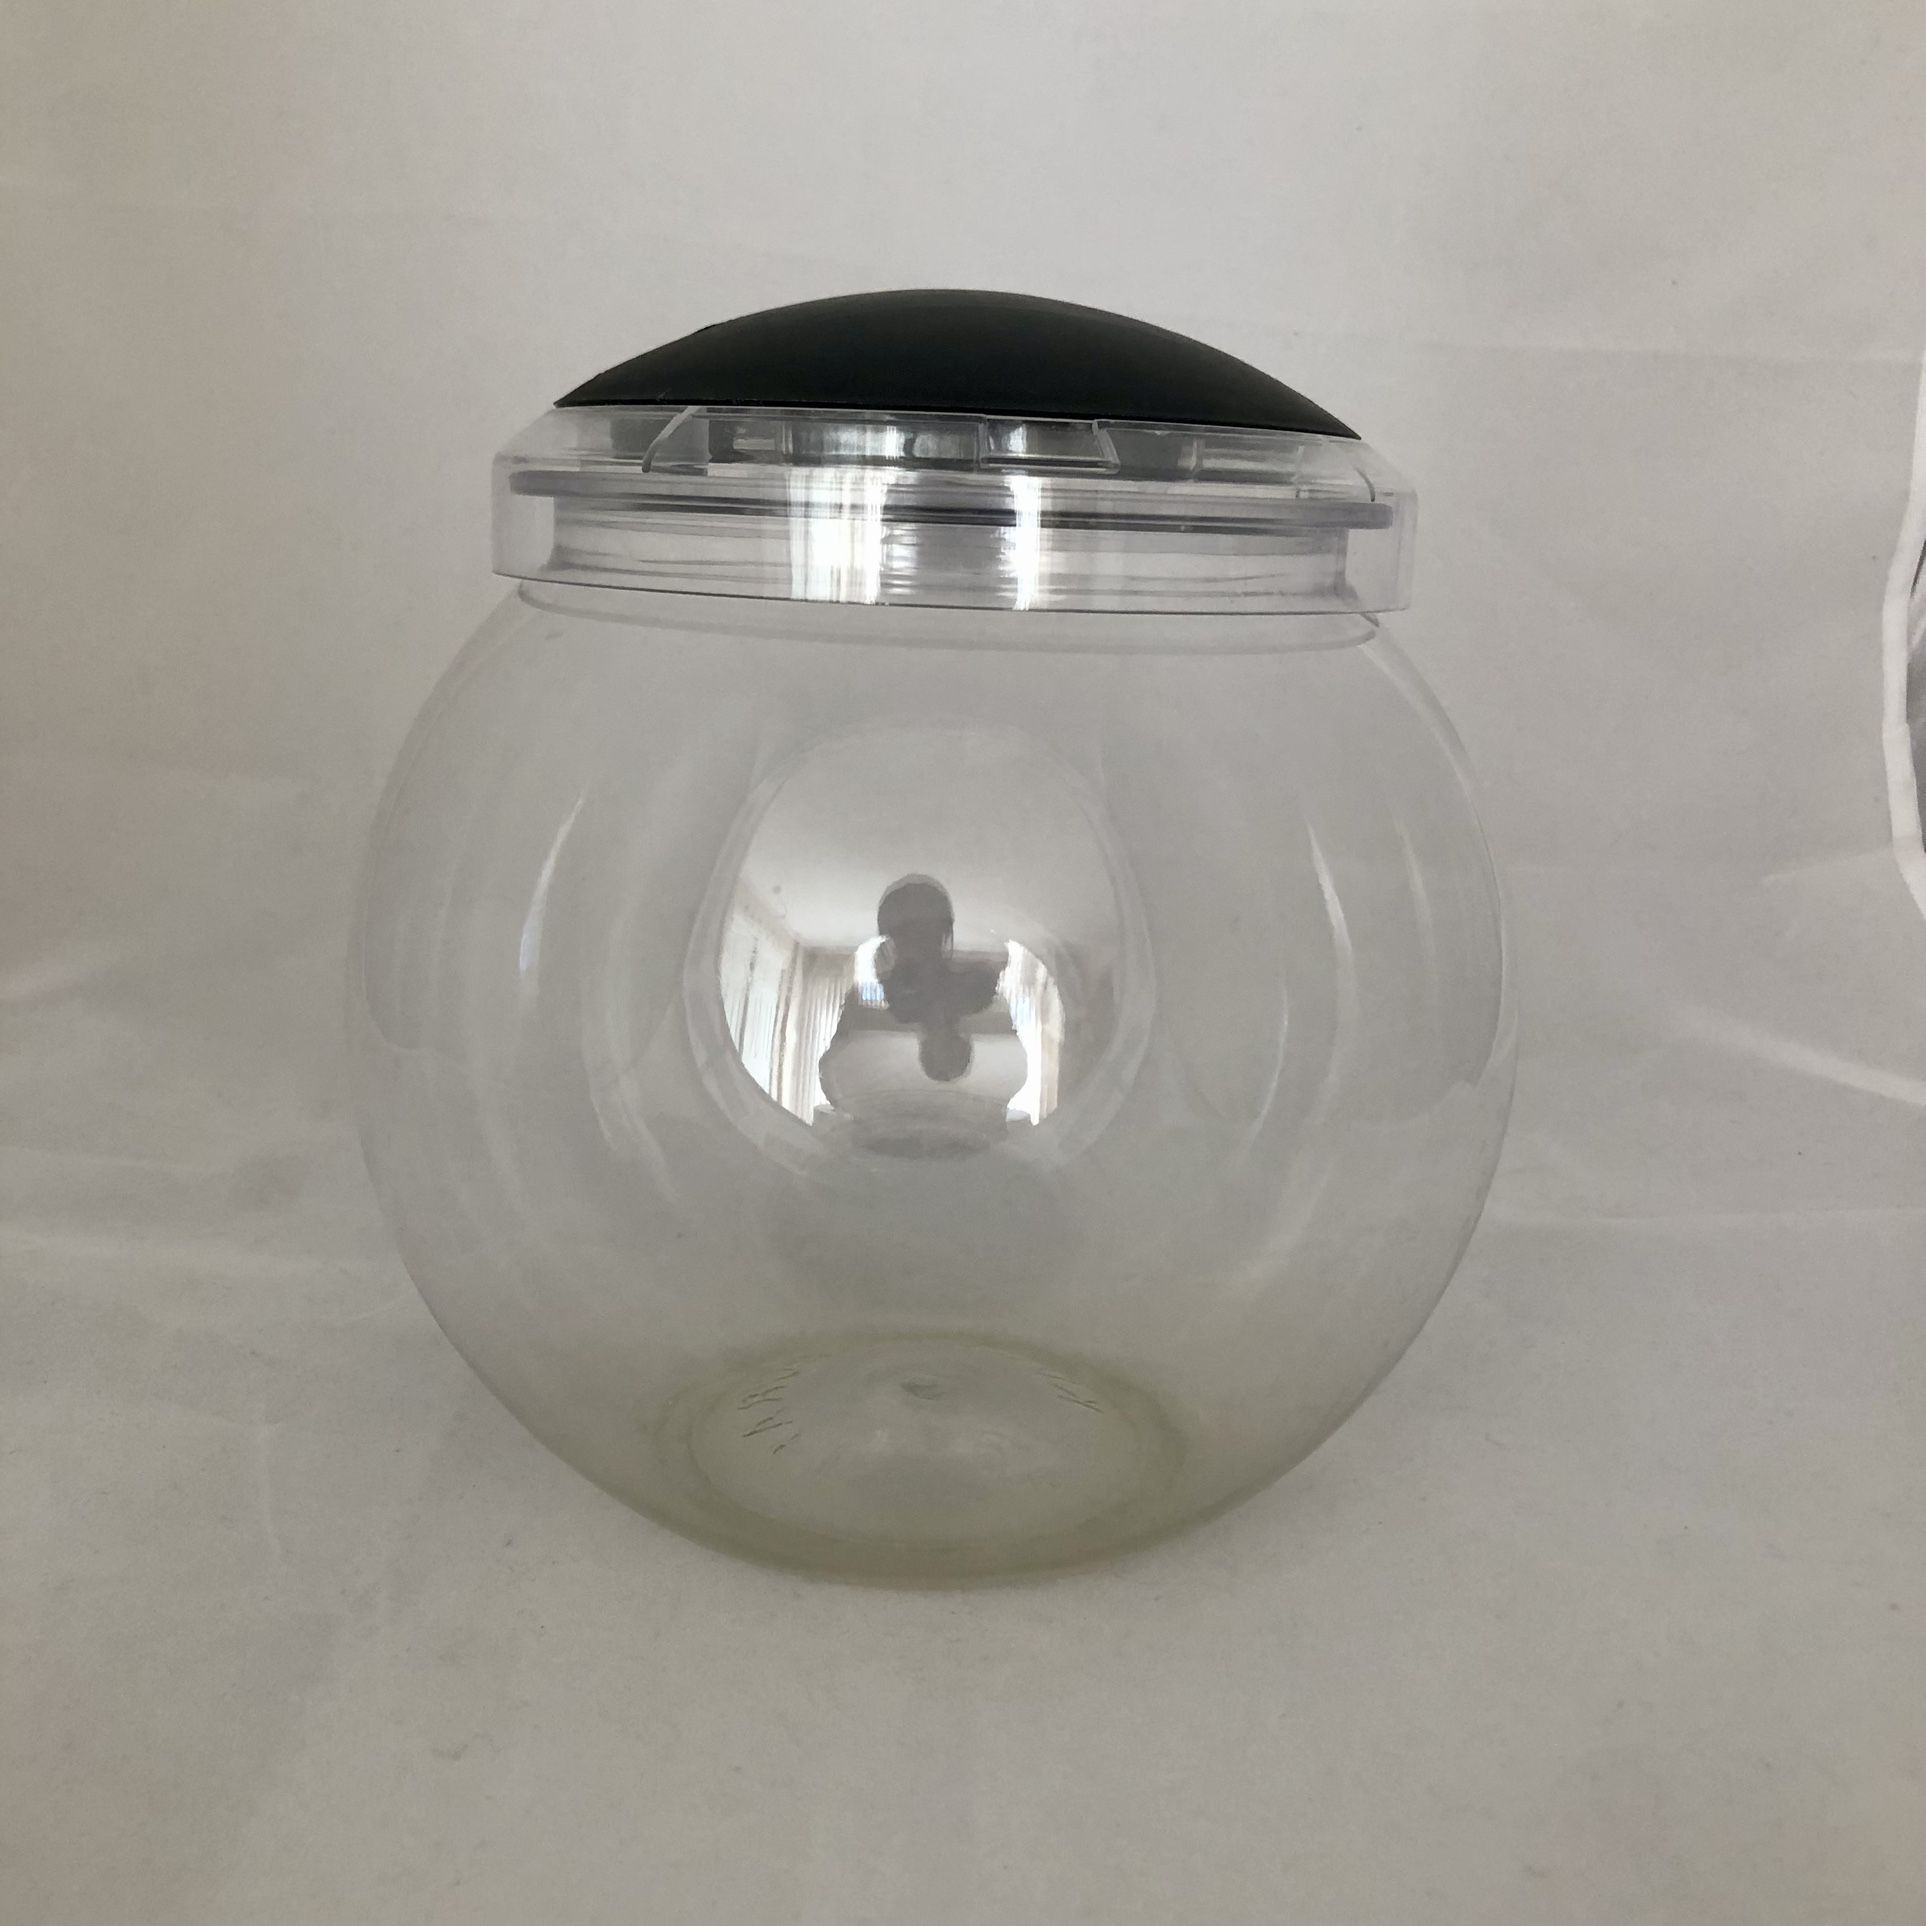 Aqua Culture 1-Gallon Globe Fish Bowl with LED Light